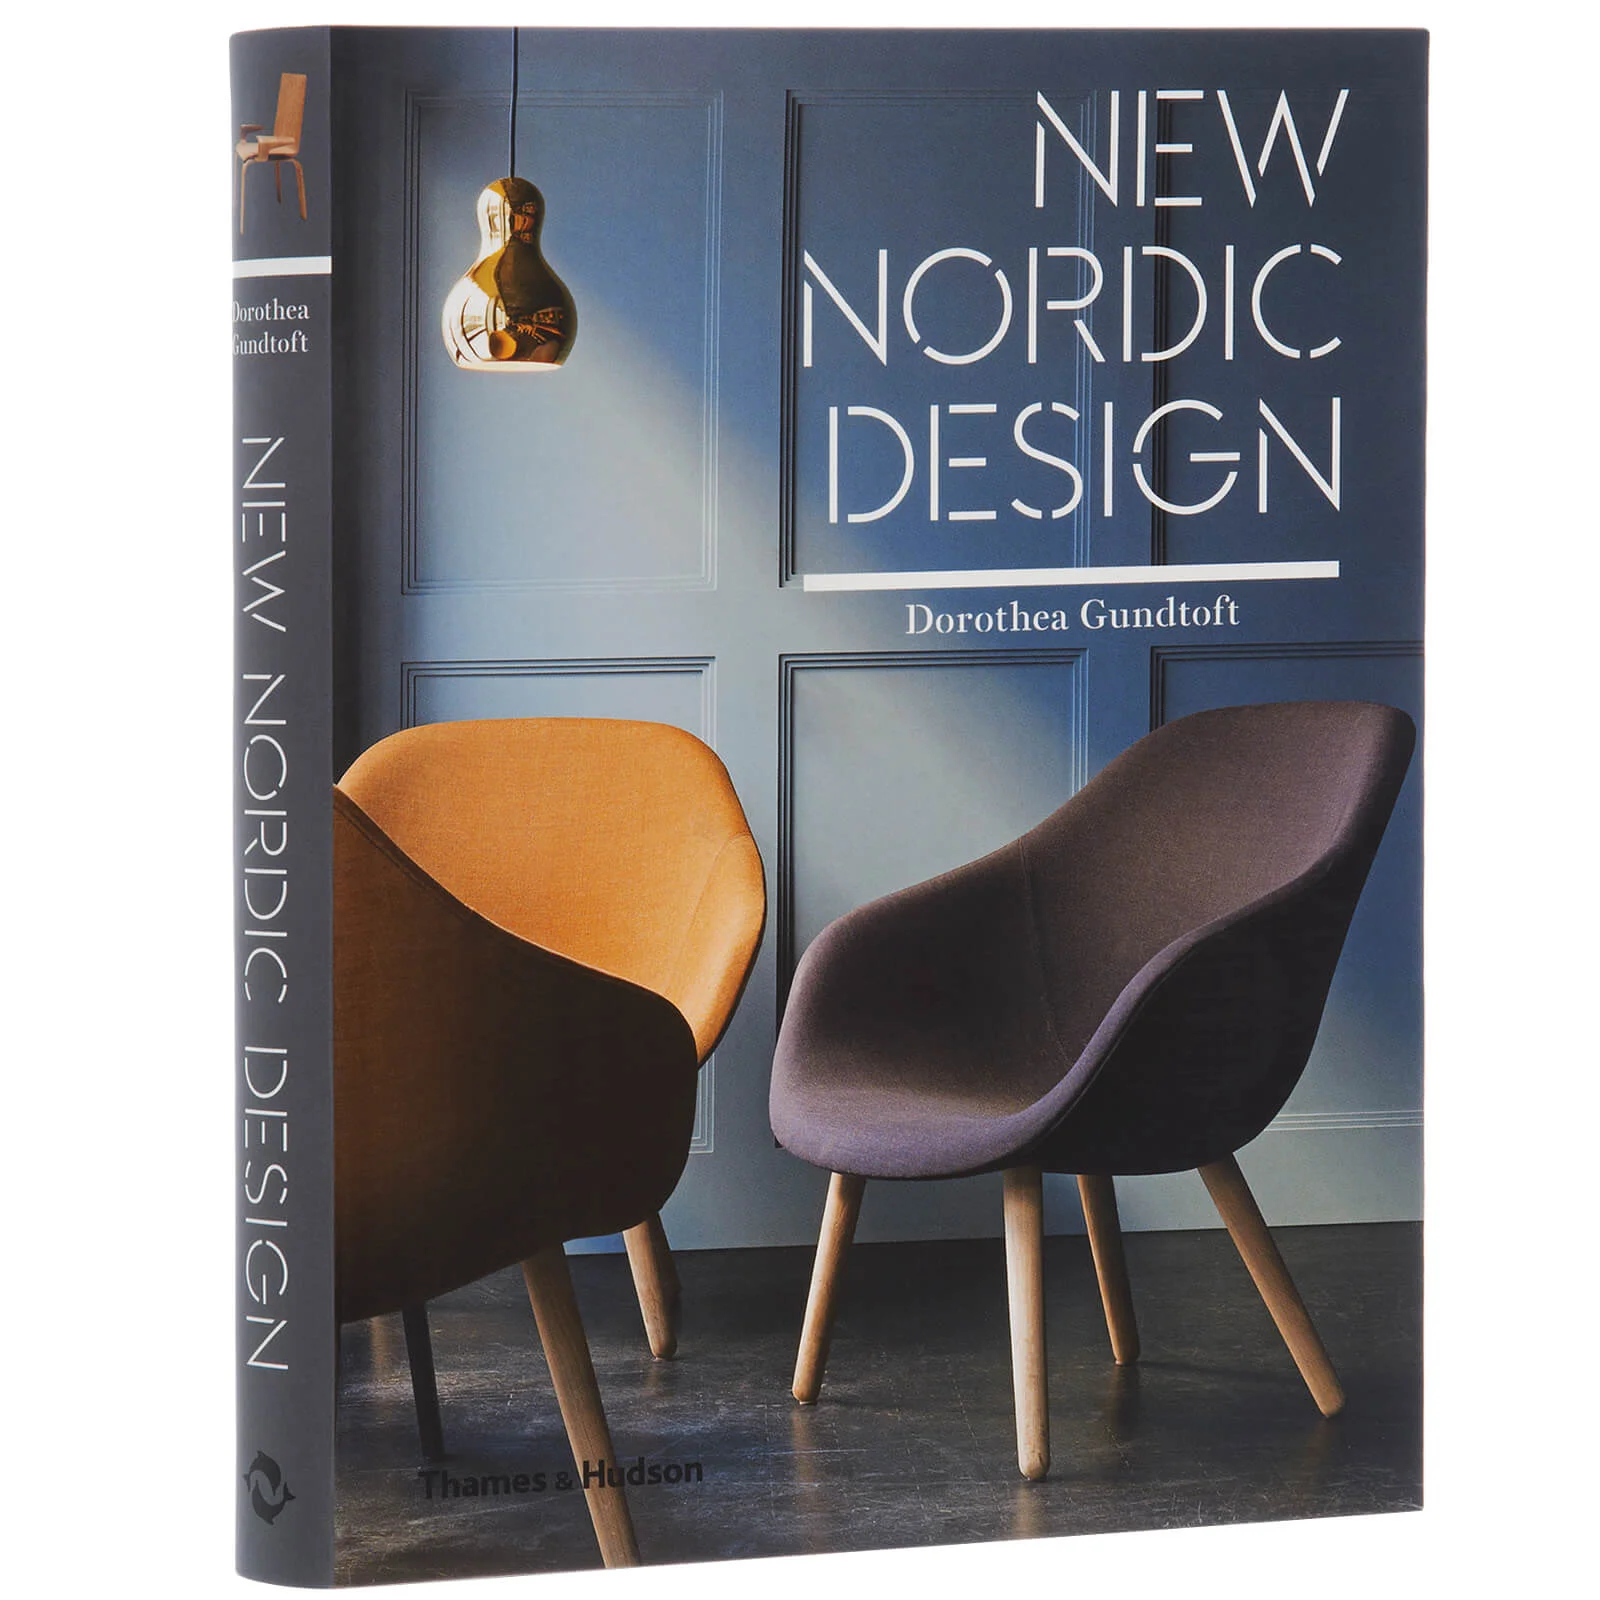 Thames and Hudson Ltd: New Nordic Design Image 1